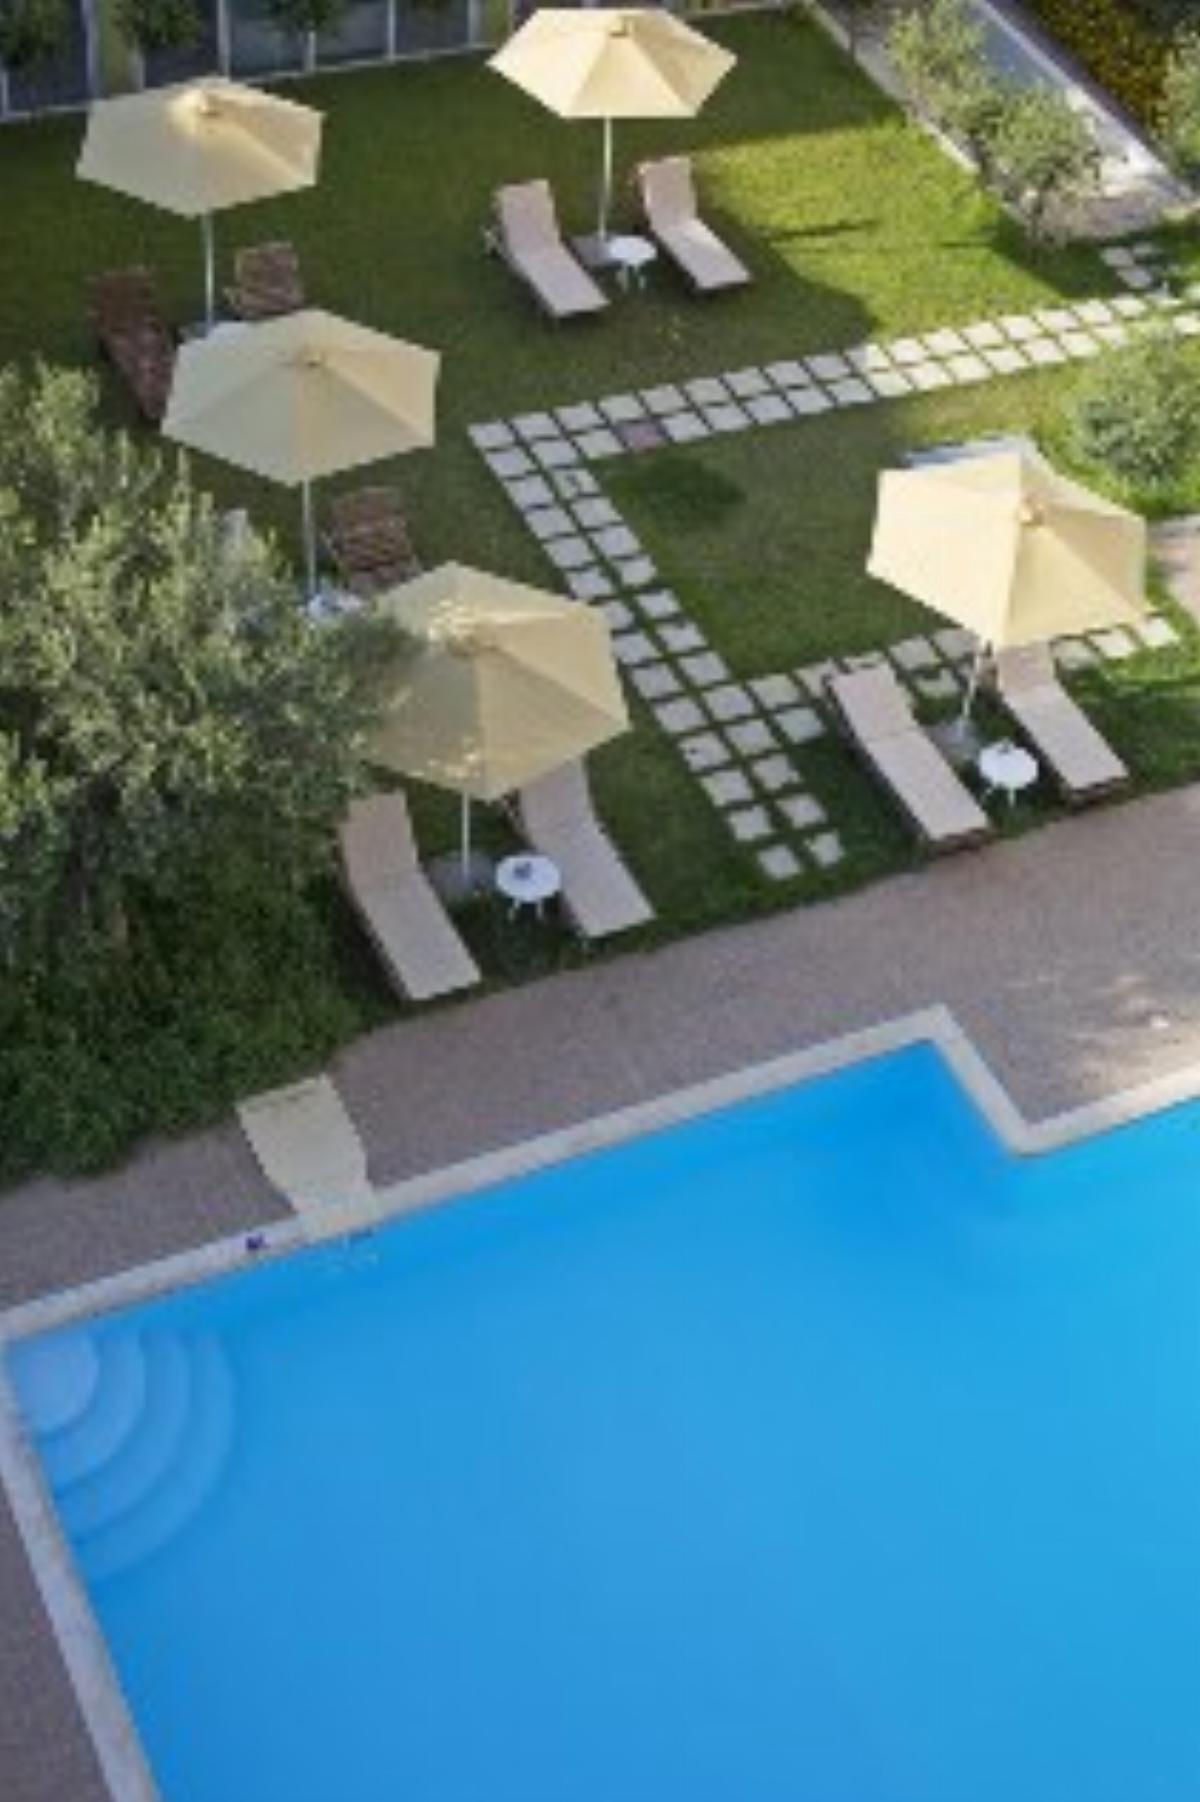 Civitel Attik Rooms & Apartments Hotel Athens Greece